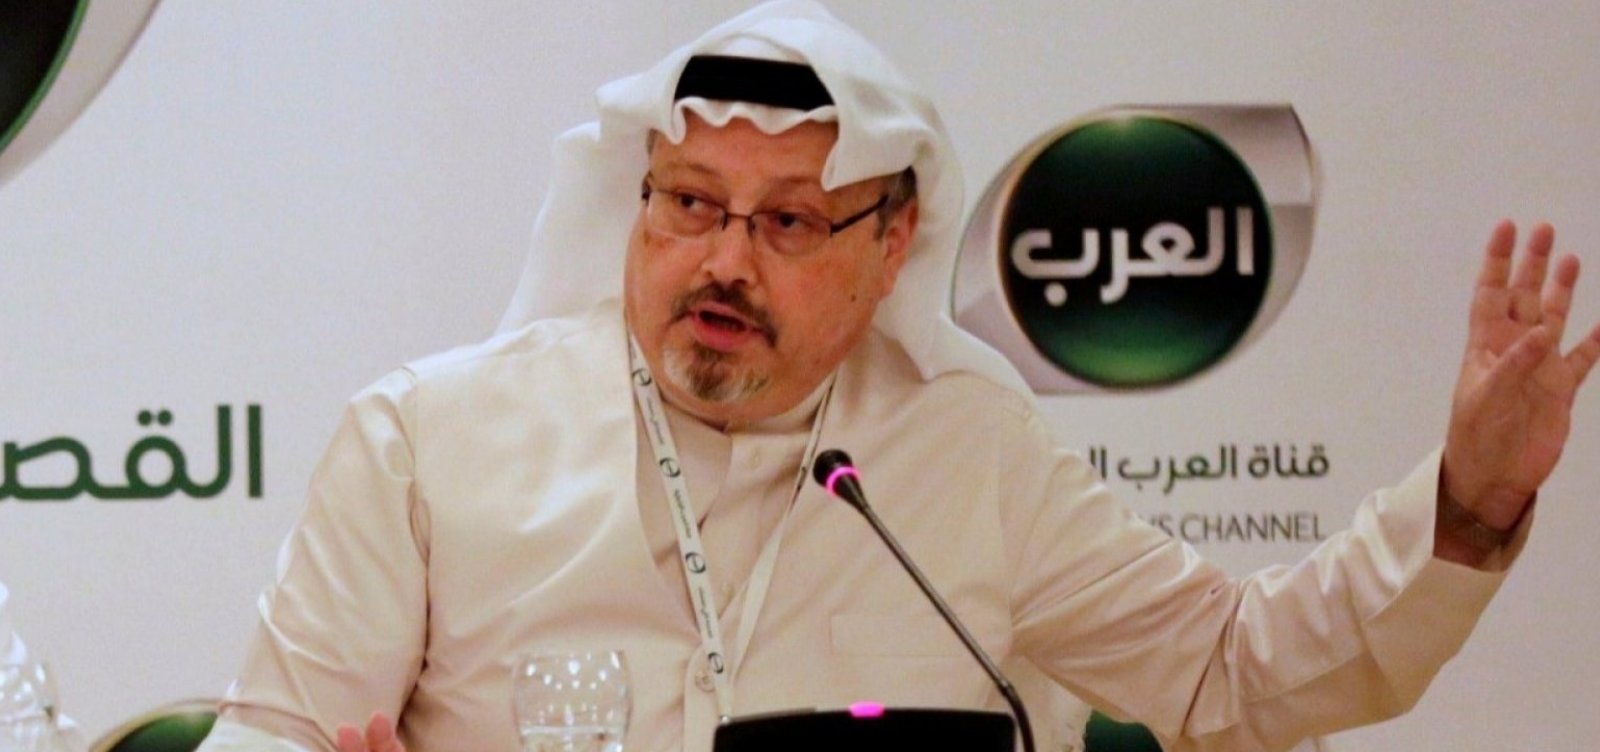 Arábia Saudita diz que jornalista Jamal Khashoggi está morto